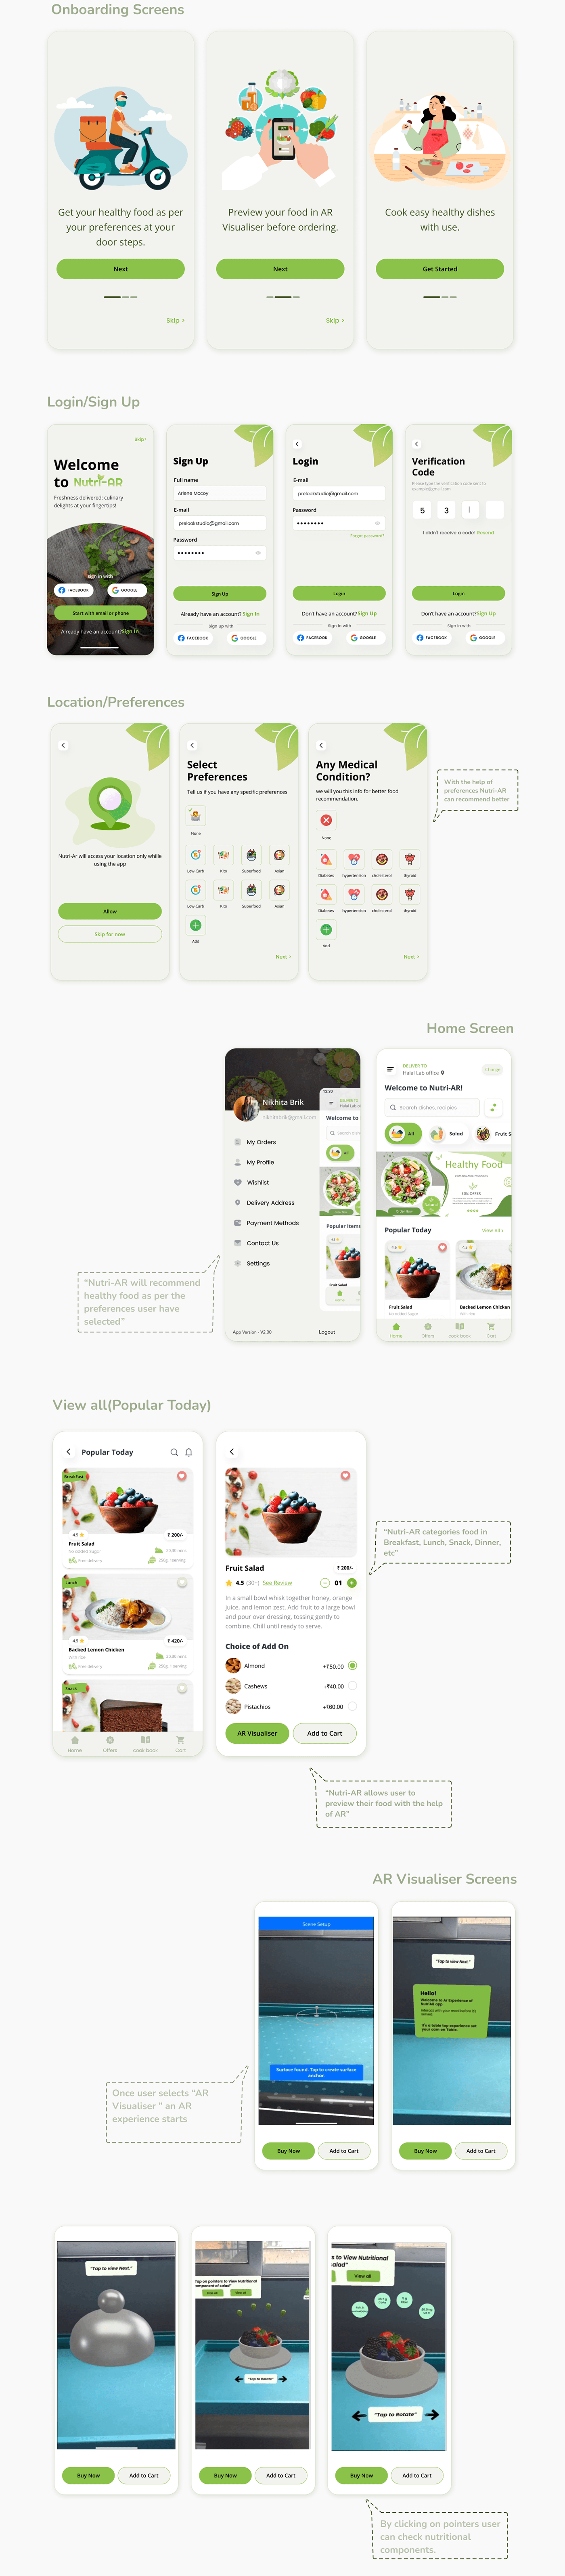 augmented reality ux/ui app design Case Study arvr Food app design FOOD INDUSTRY user experience user interface design portfolio